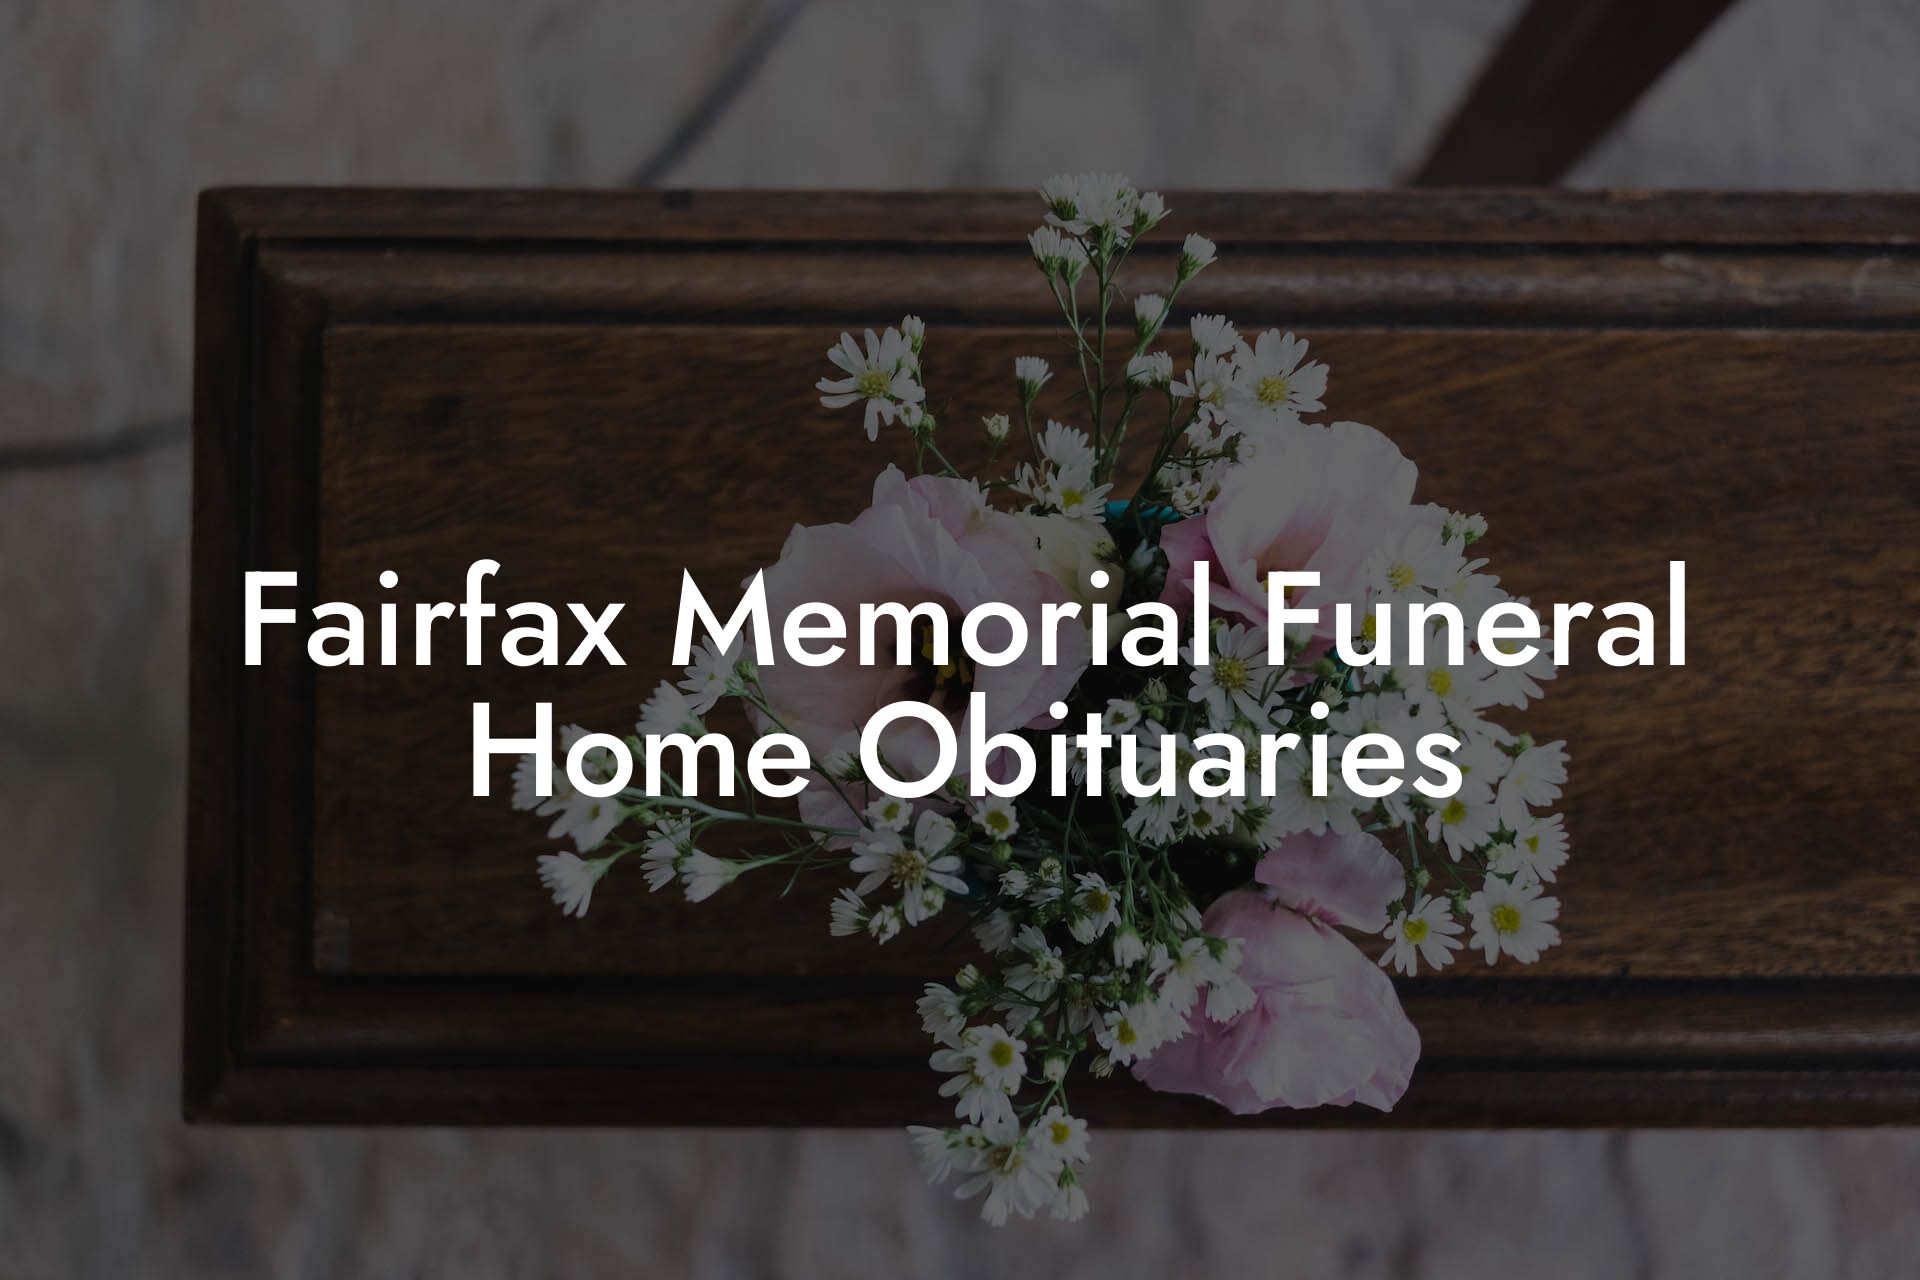 Fairfax Memorial Funeral Home Obituaries